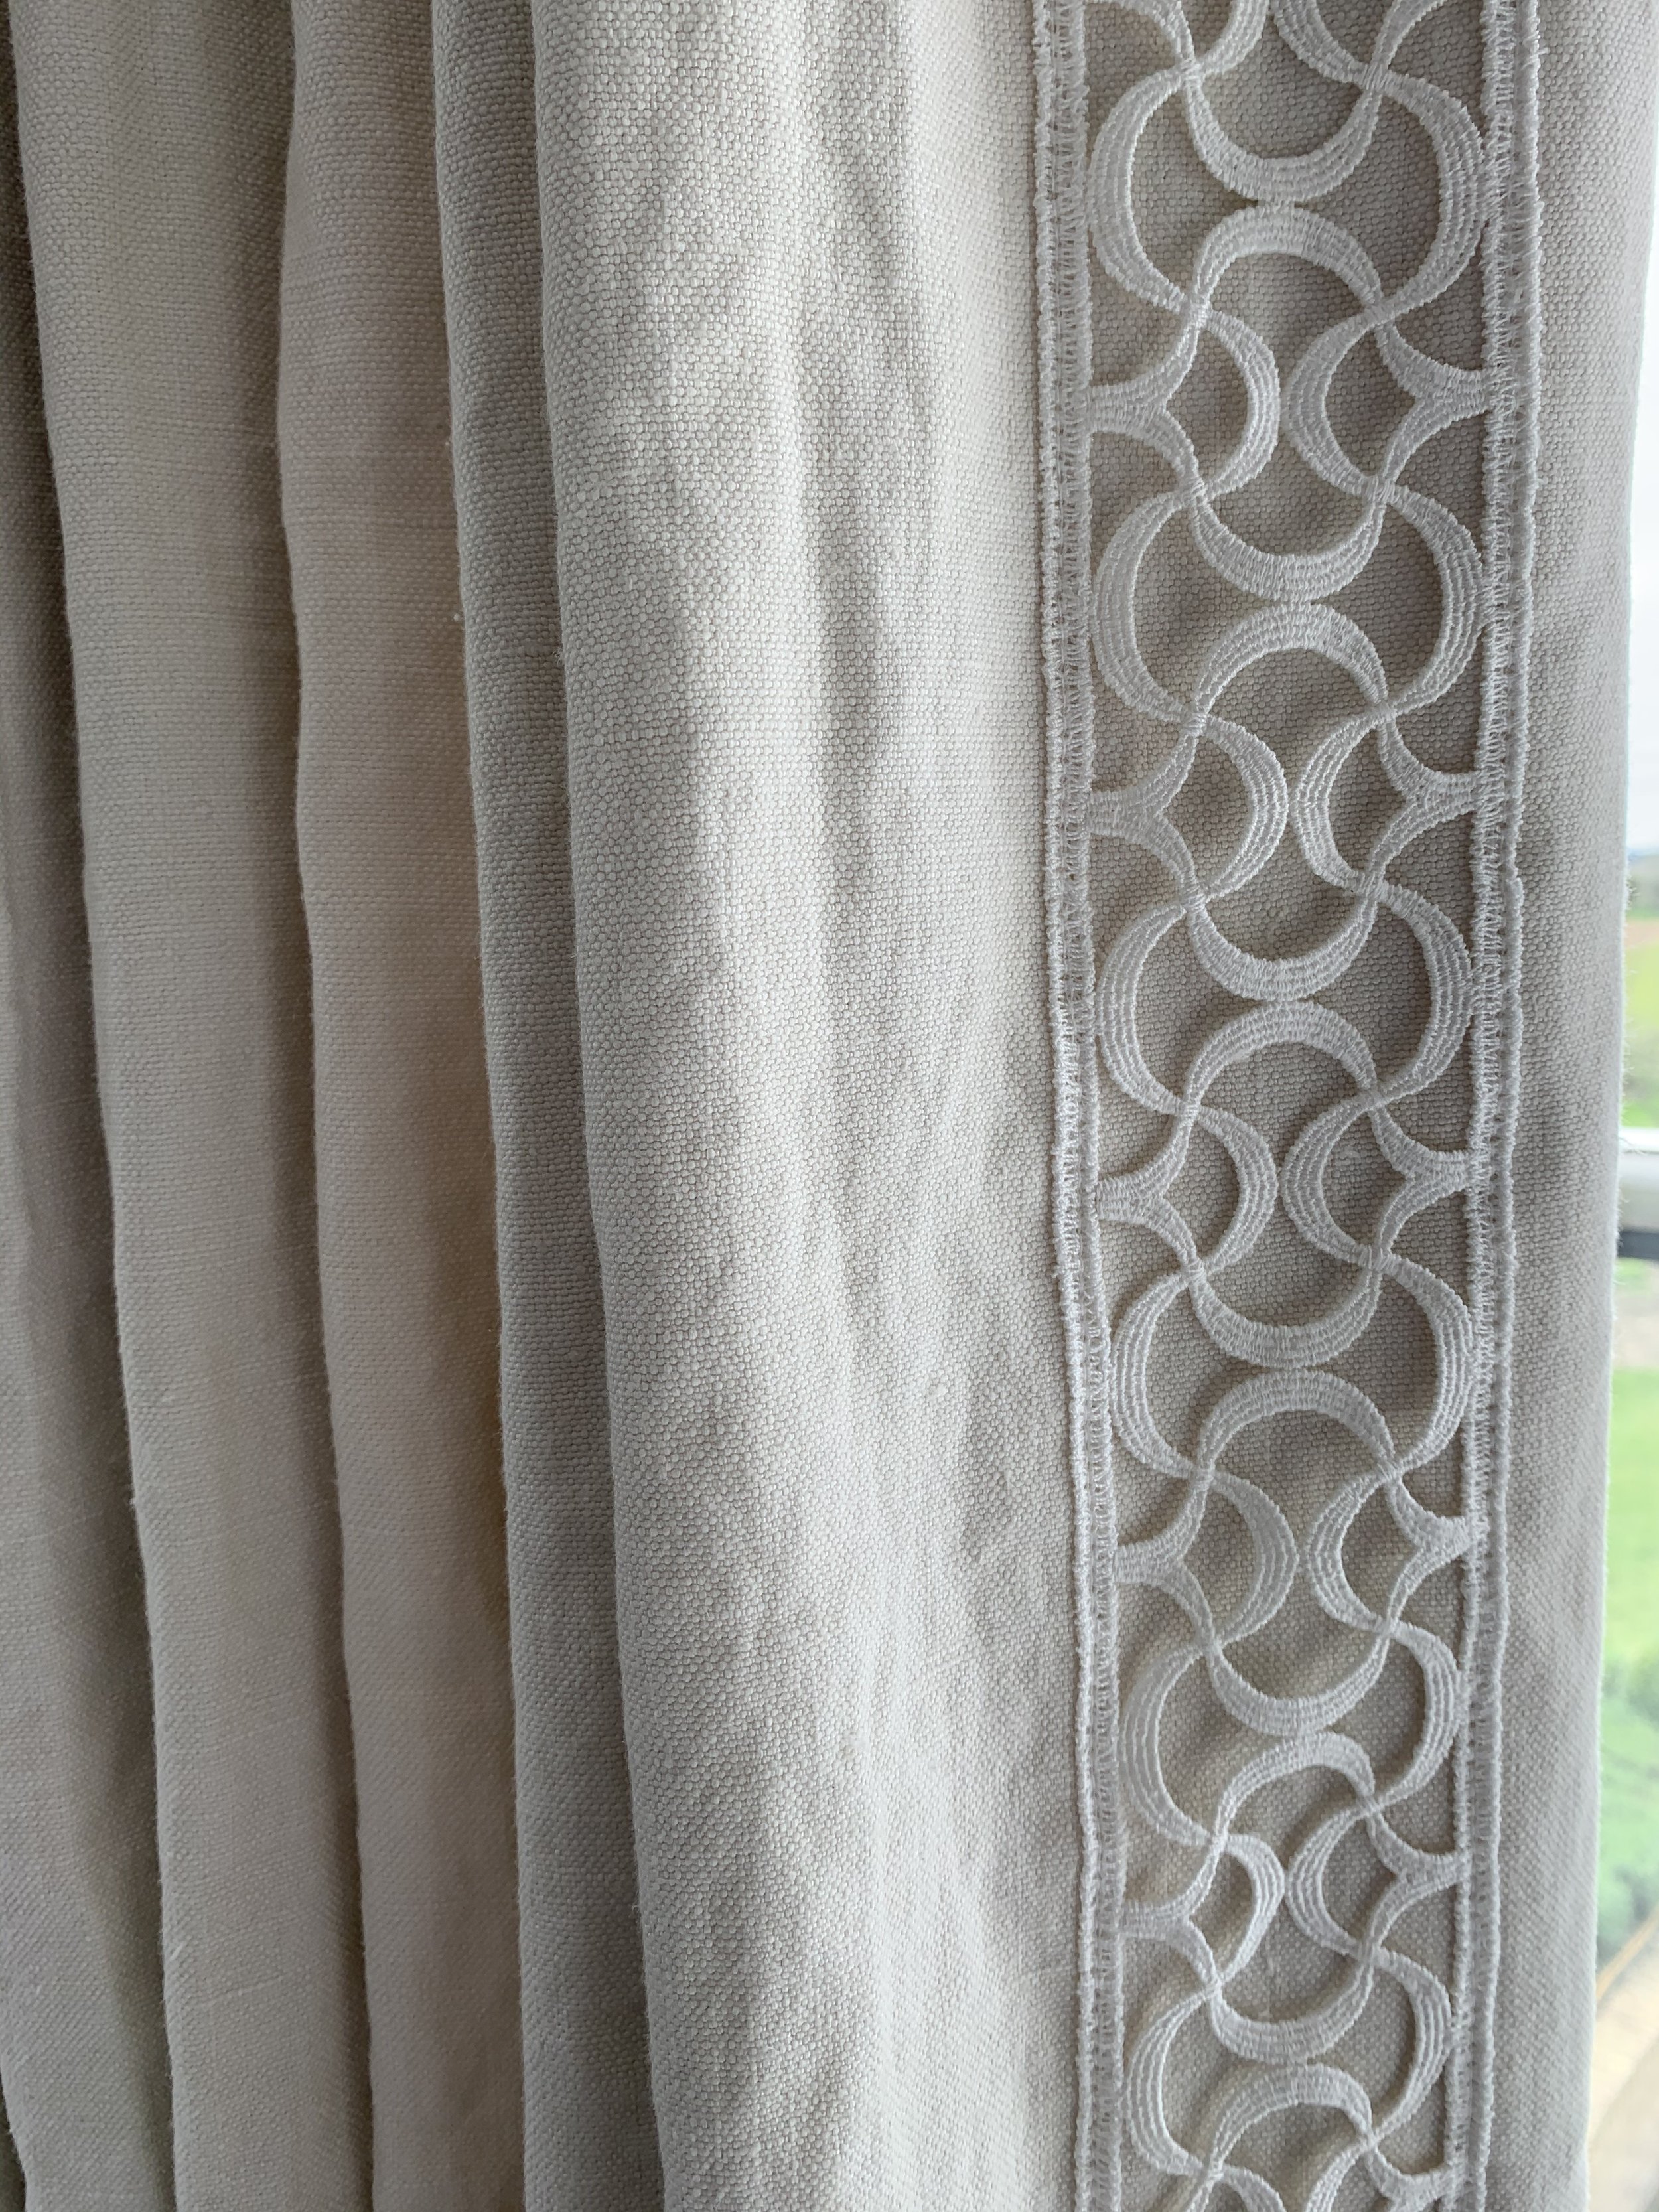 Curtain trim details